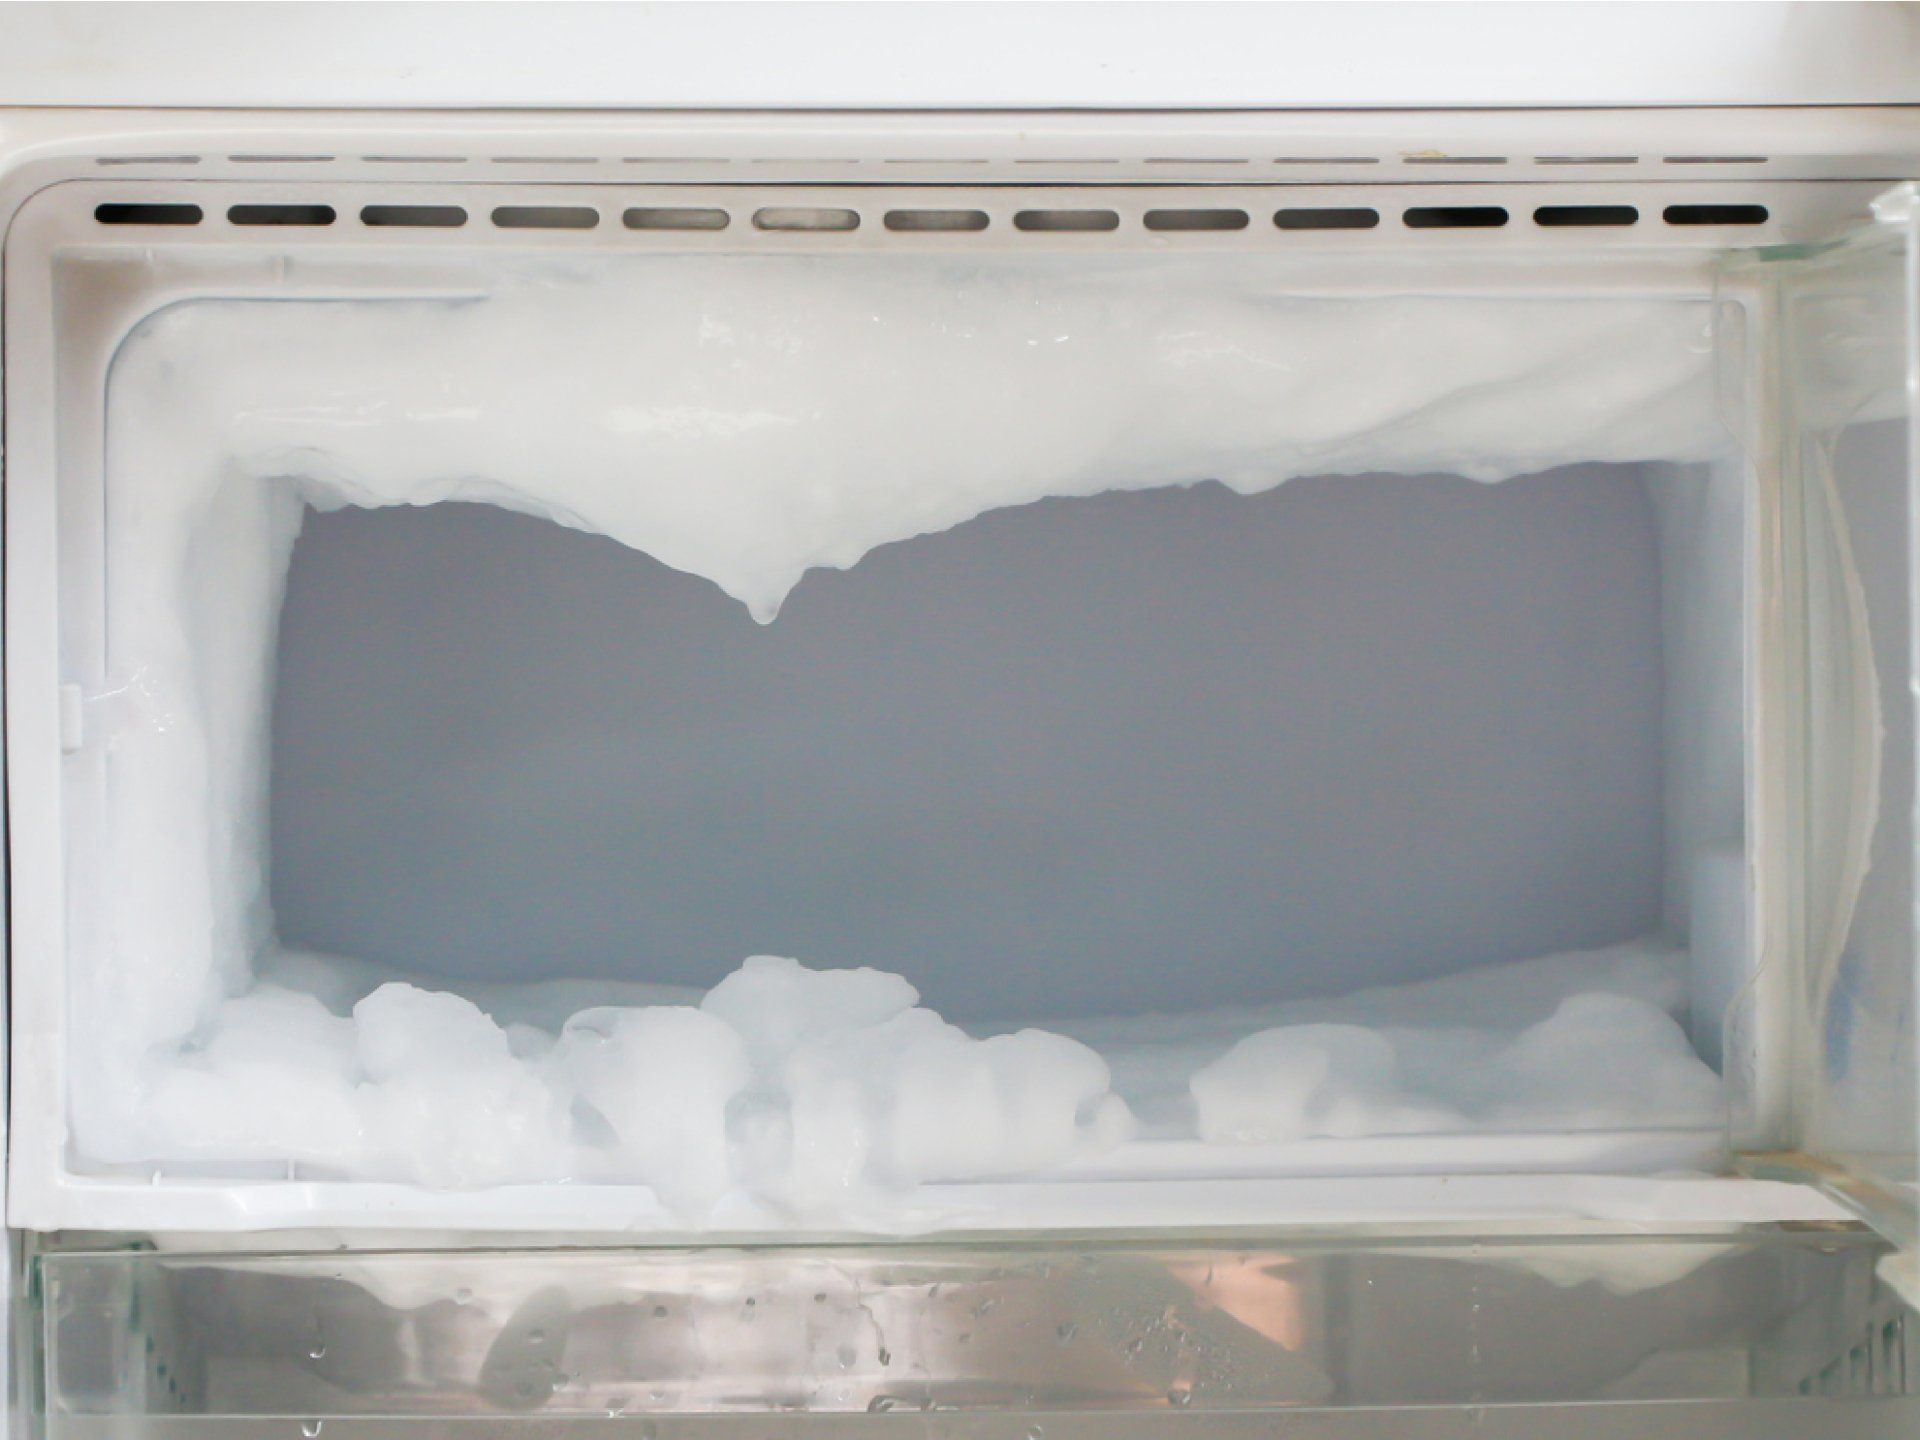 Resistência de degelo para geladeira residencial